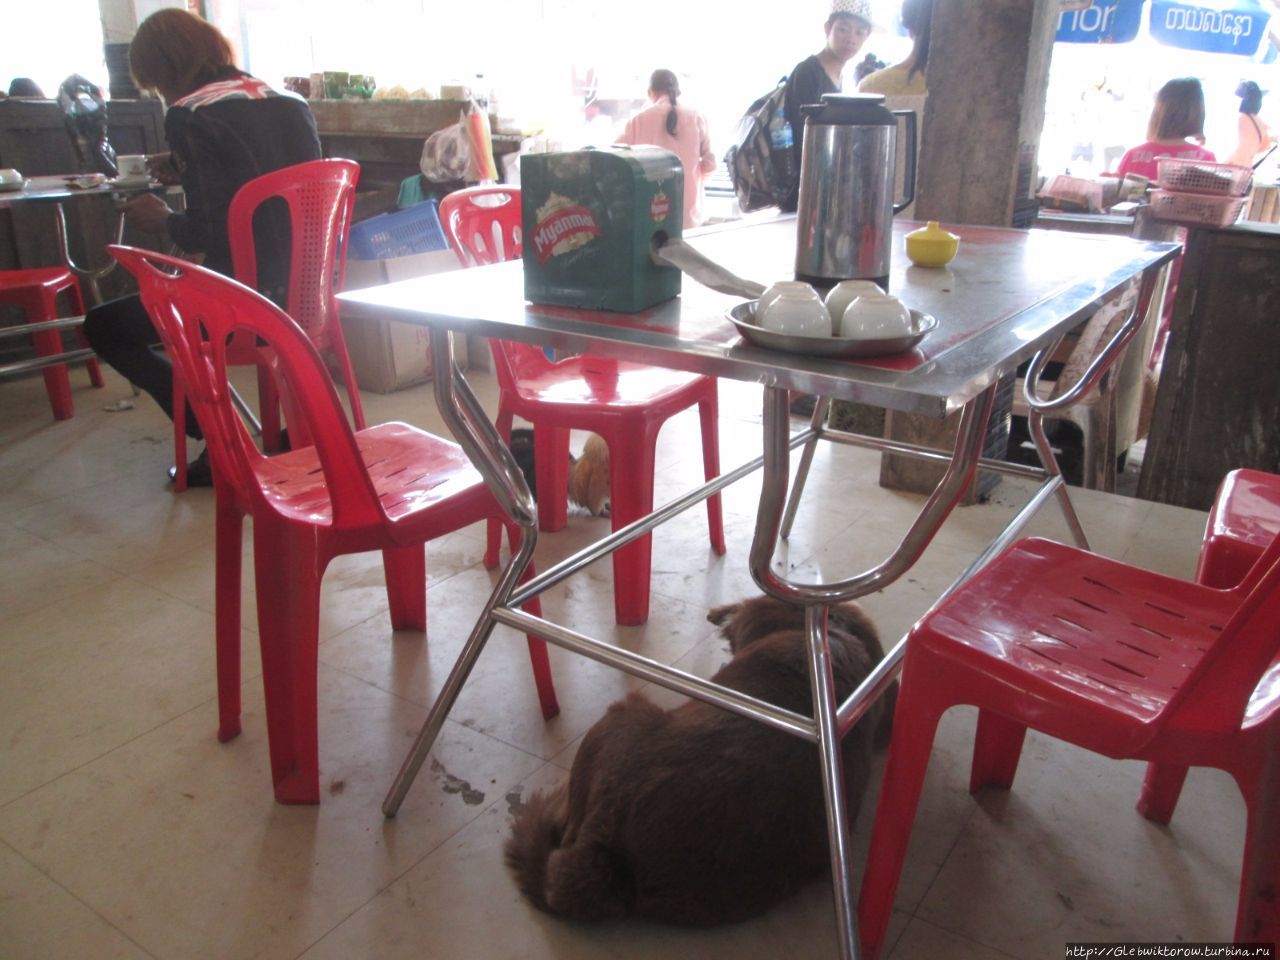 Остановка в придорожном кафе по пути в Патейн Патейн, Мьянма